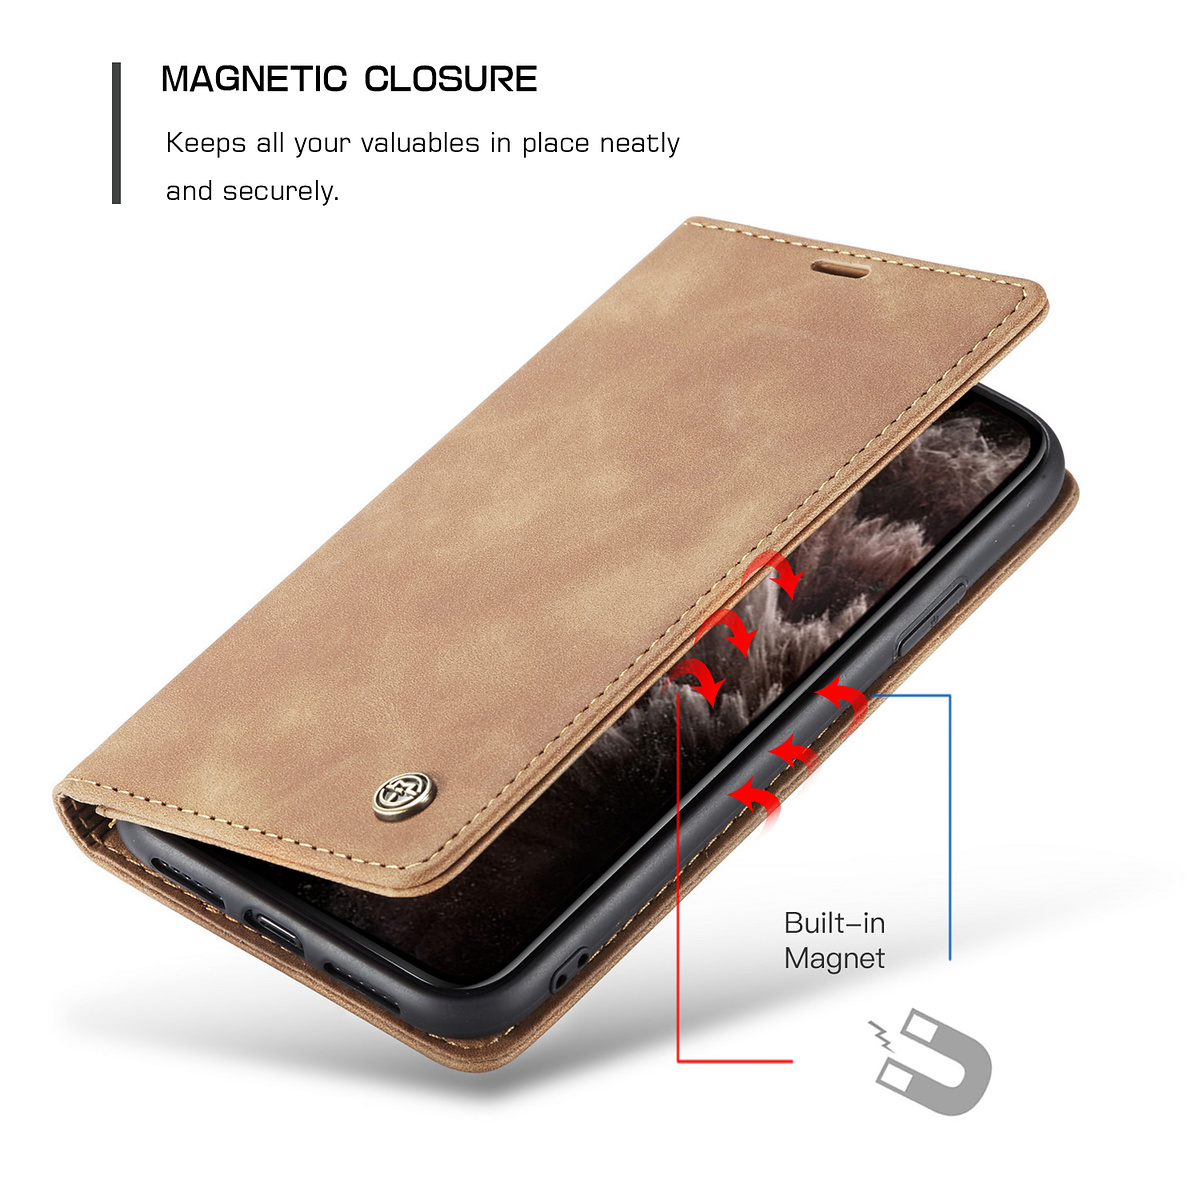 CaseMe plånboksfodral, iPhone 11 Pro Max, brun